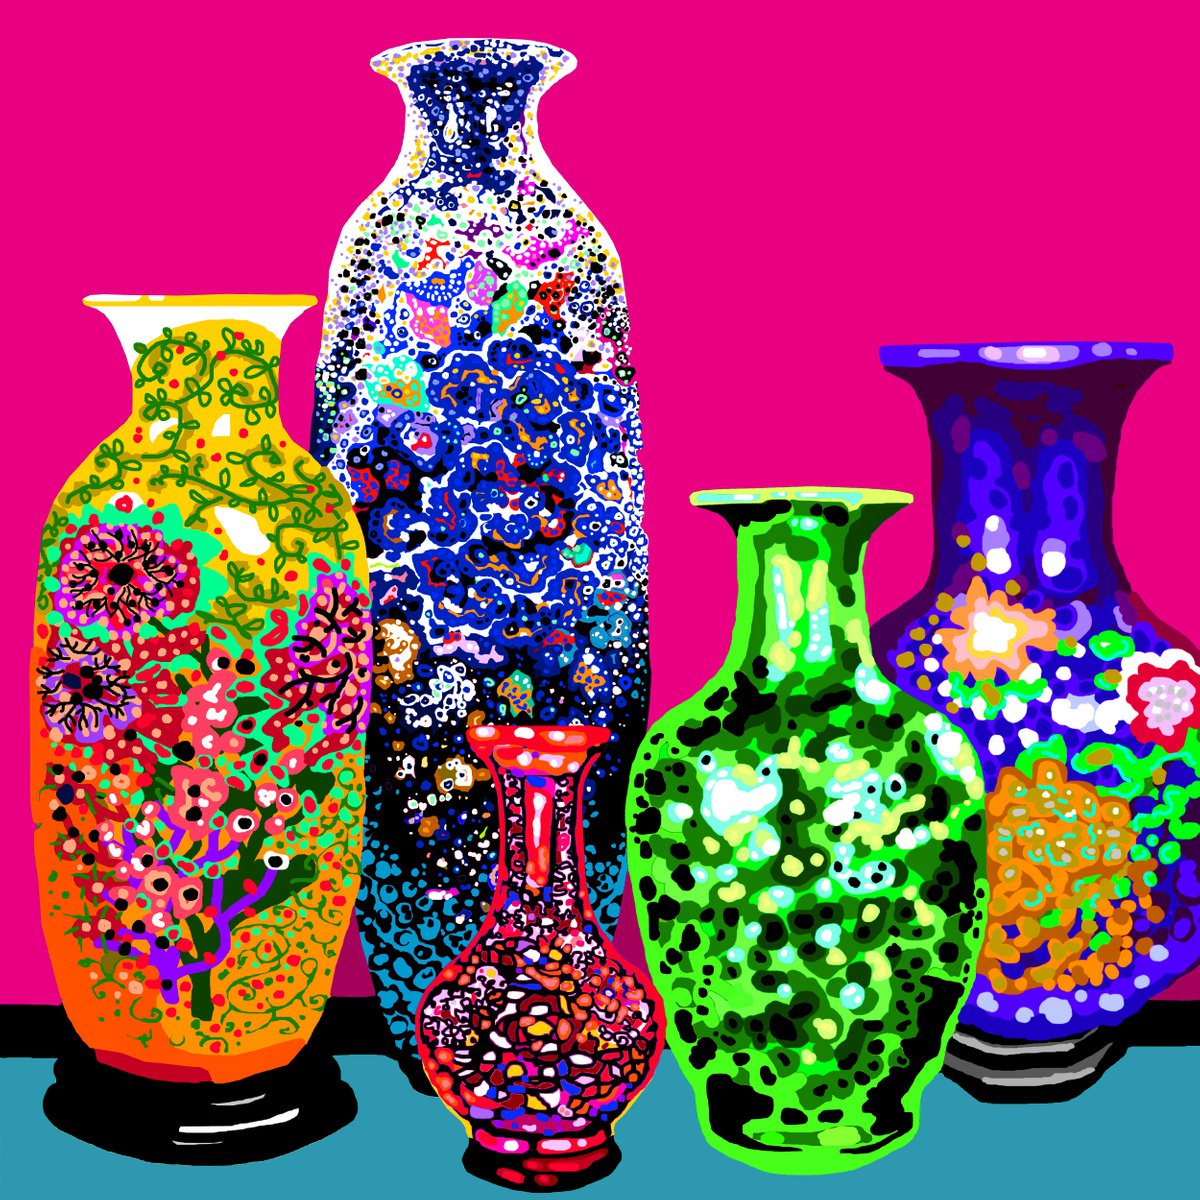 Five chinese vases/ Cinco jarrones chinos (pop art, flowers) by Alejos